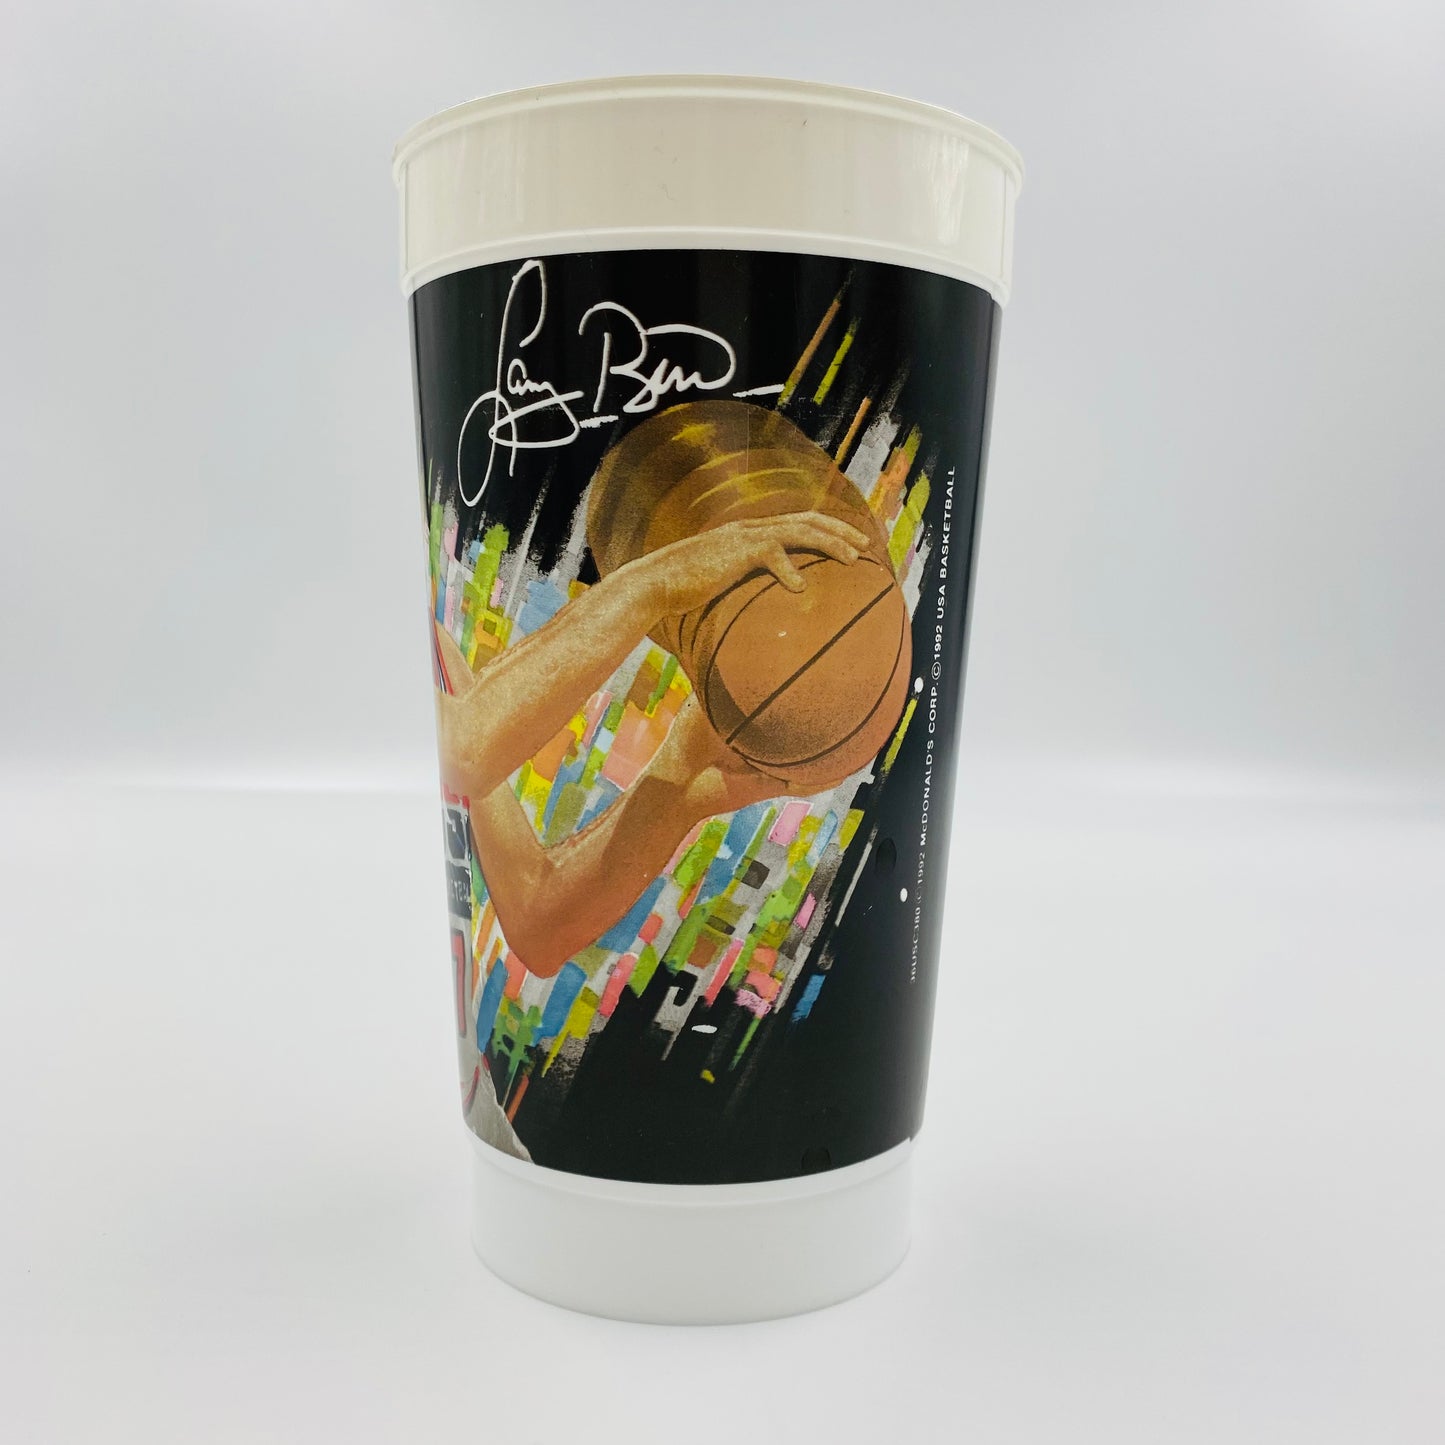 USA Basketball Dream Team Larry Bird 32oz plastic cup (1992) McDonald's